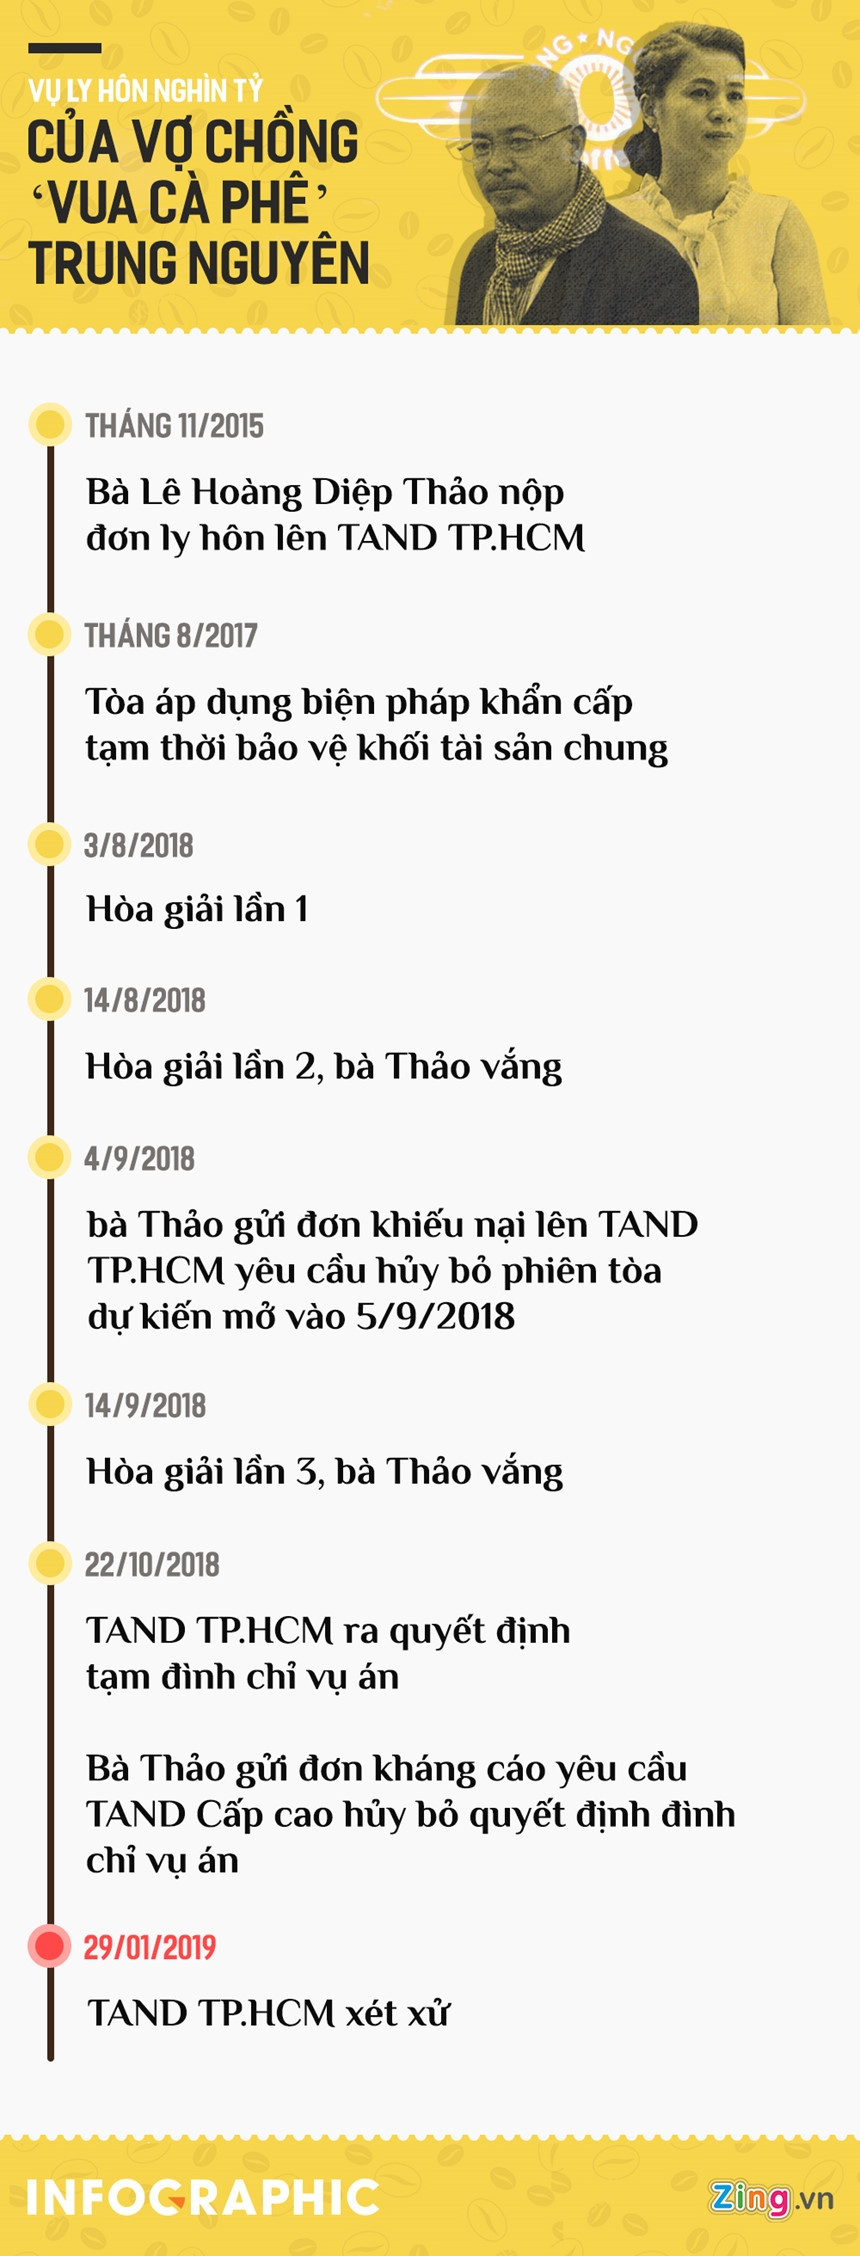 Ong Vu khong chap nhan ba Thao rut don ly hon hinh anh 3